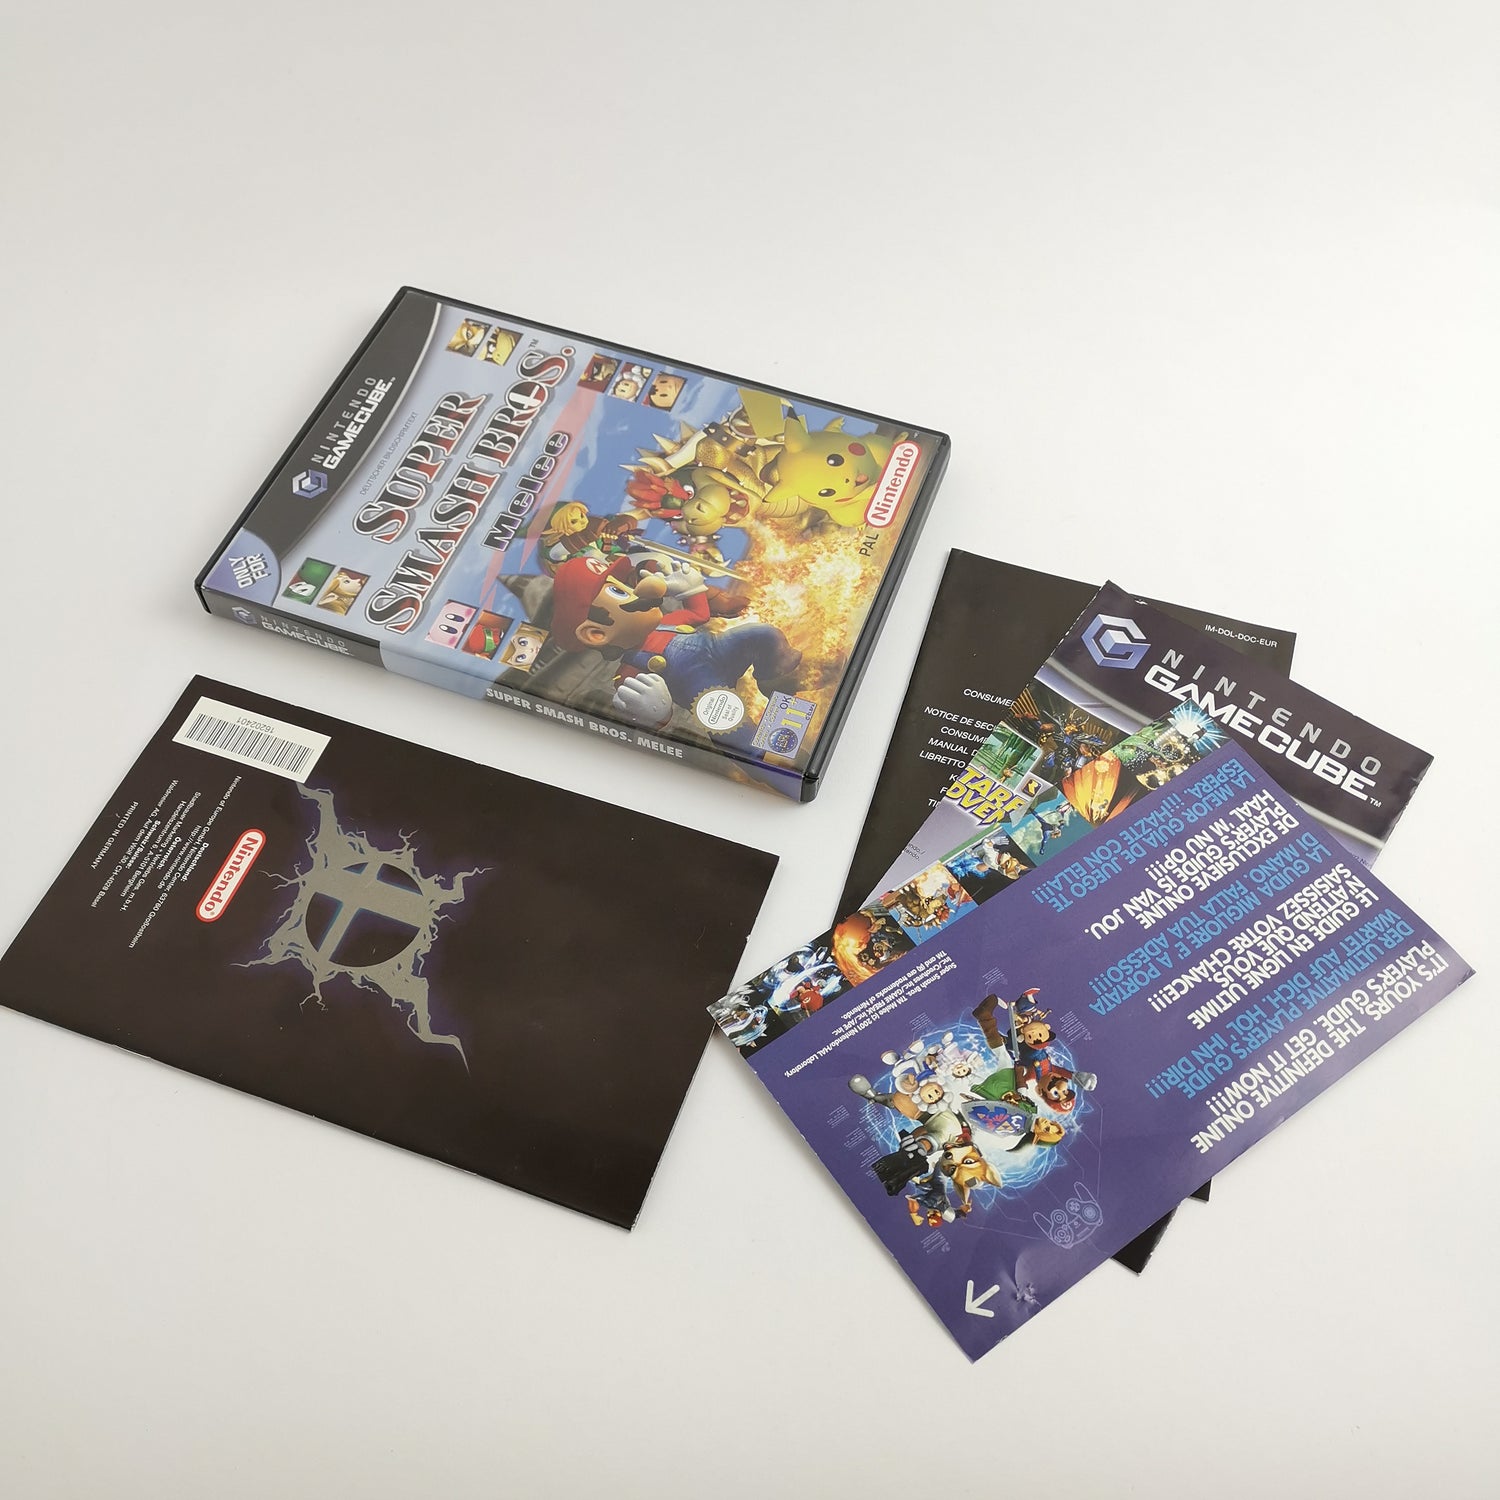 Nintendo Gamecube Game: Super Smash Bros. Melee - Original Packaging & Instructions PAL GC Disc